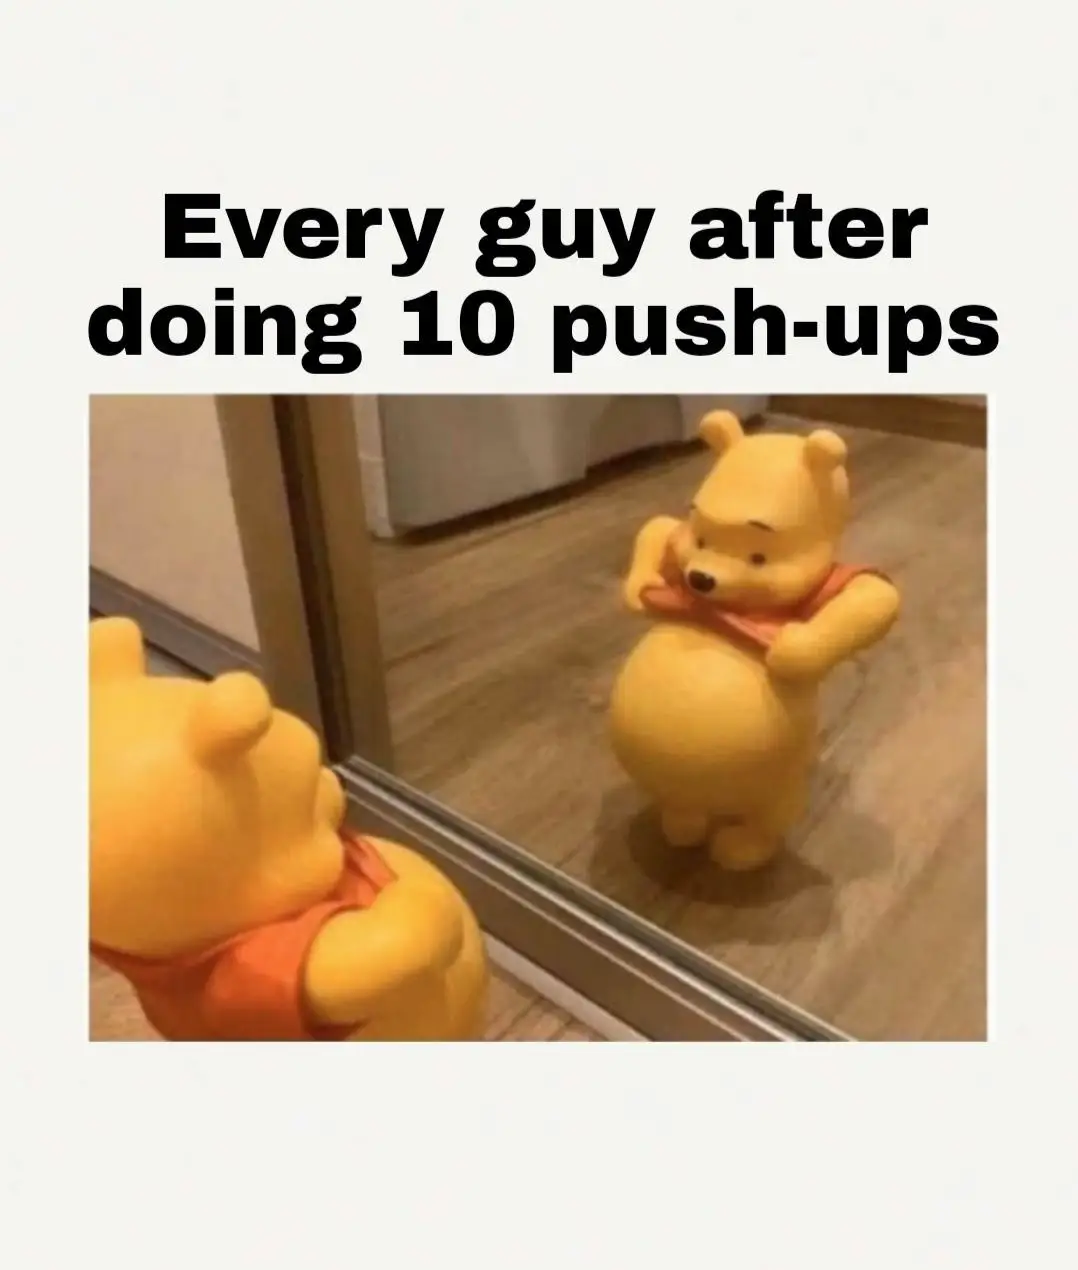 winnie pooh gym meme